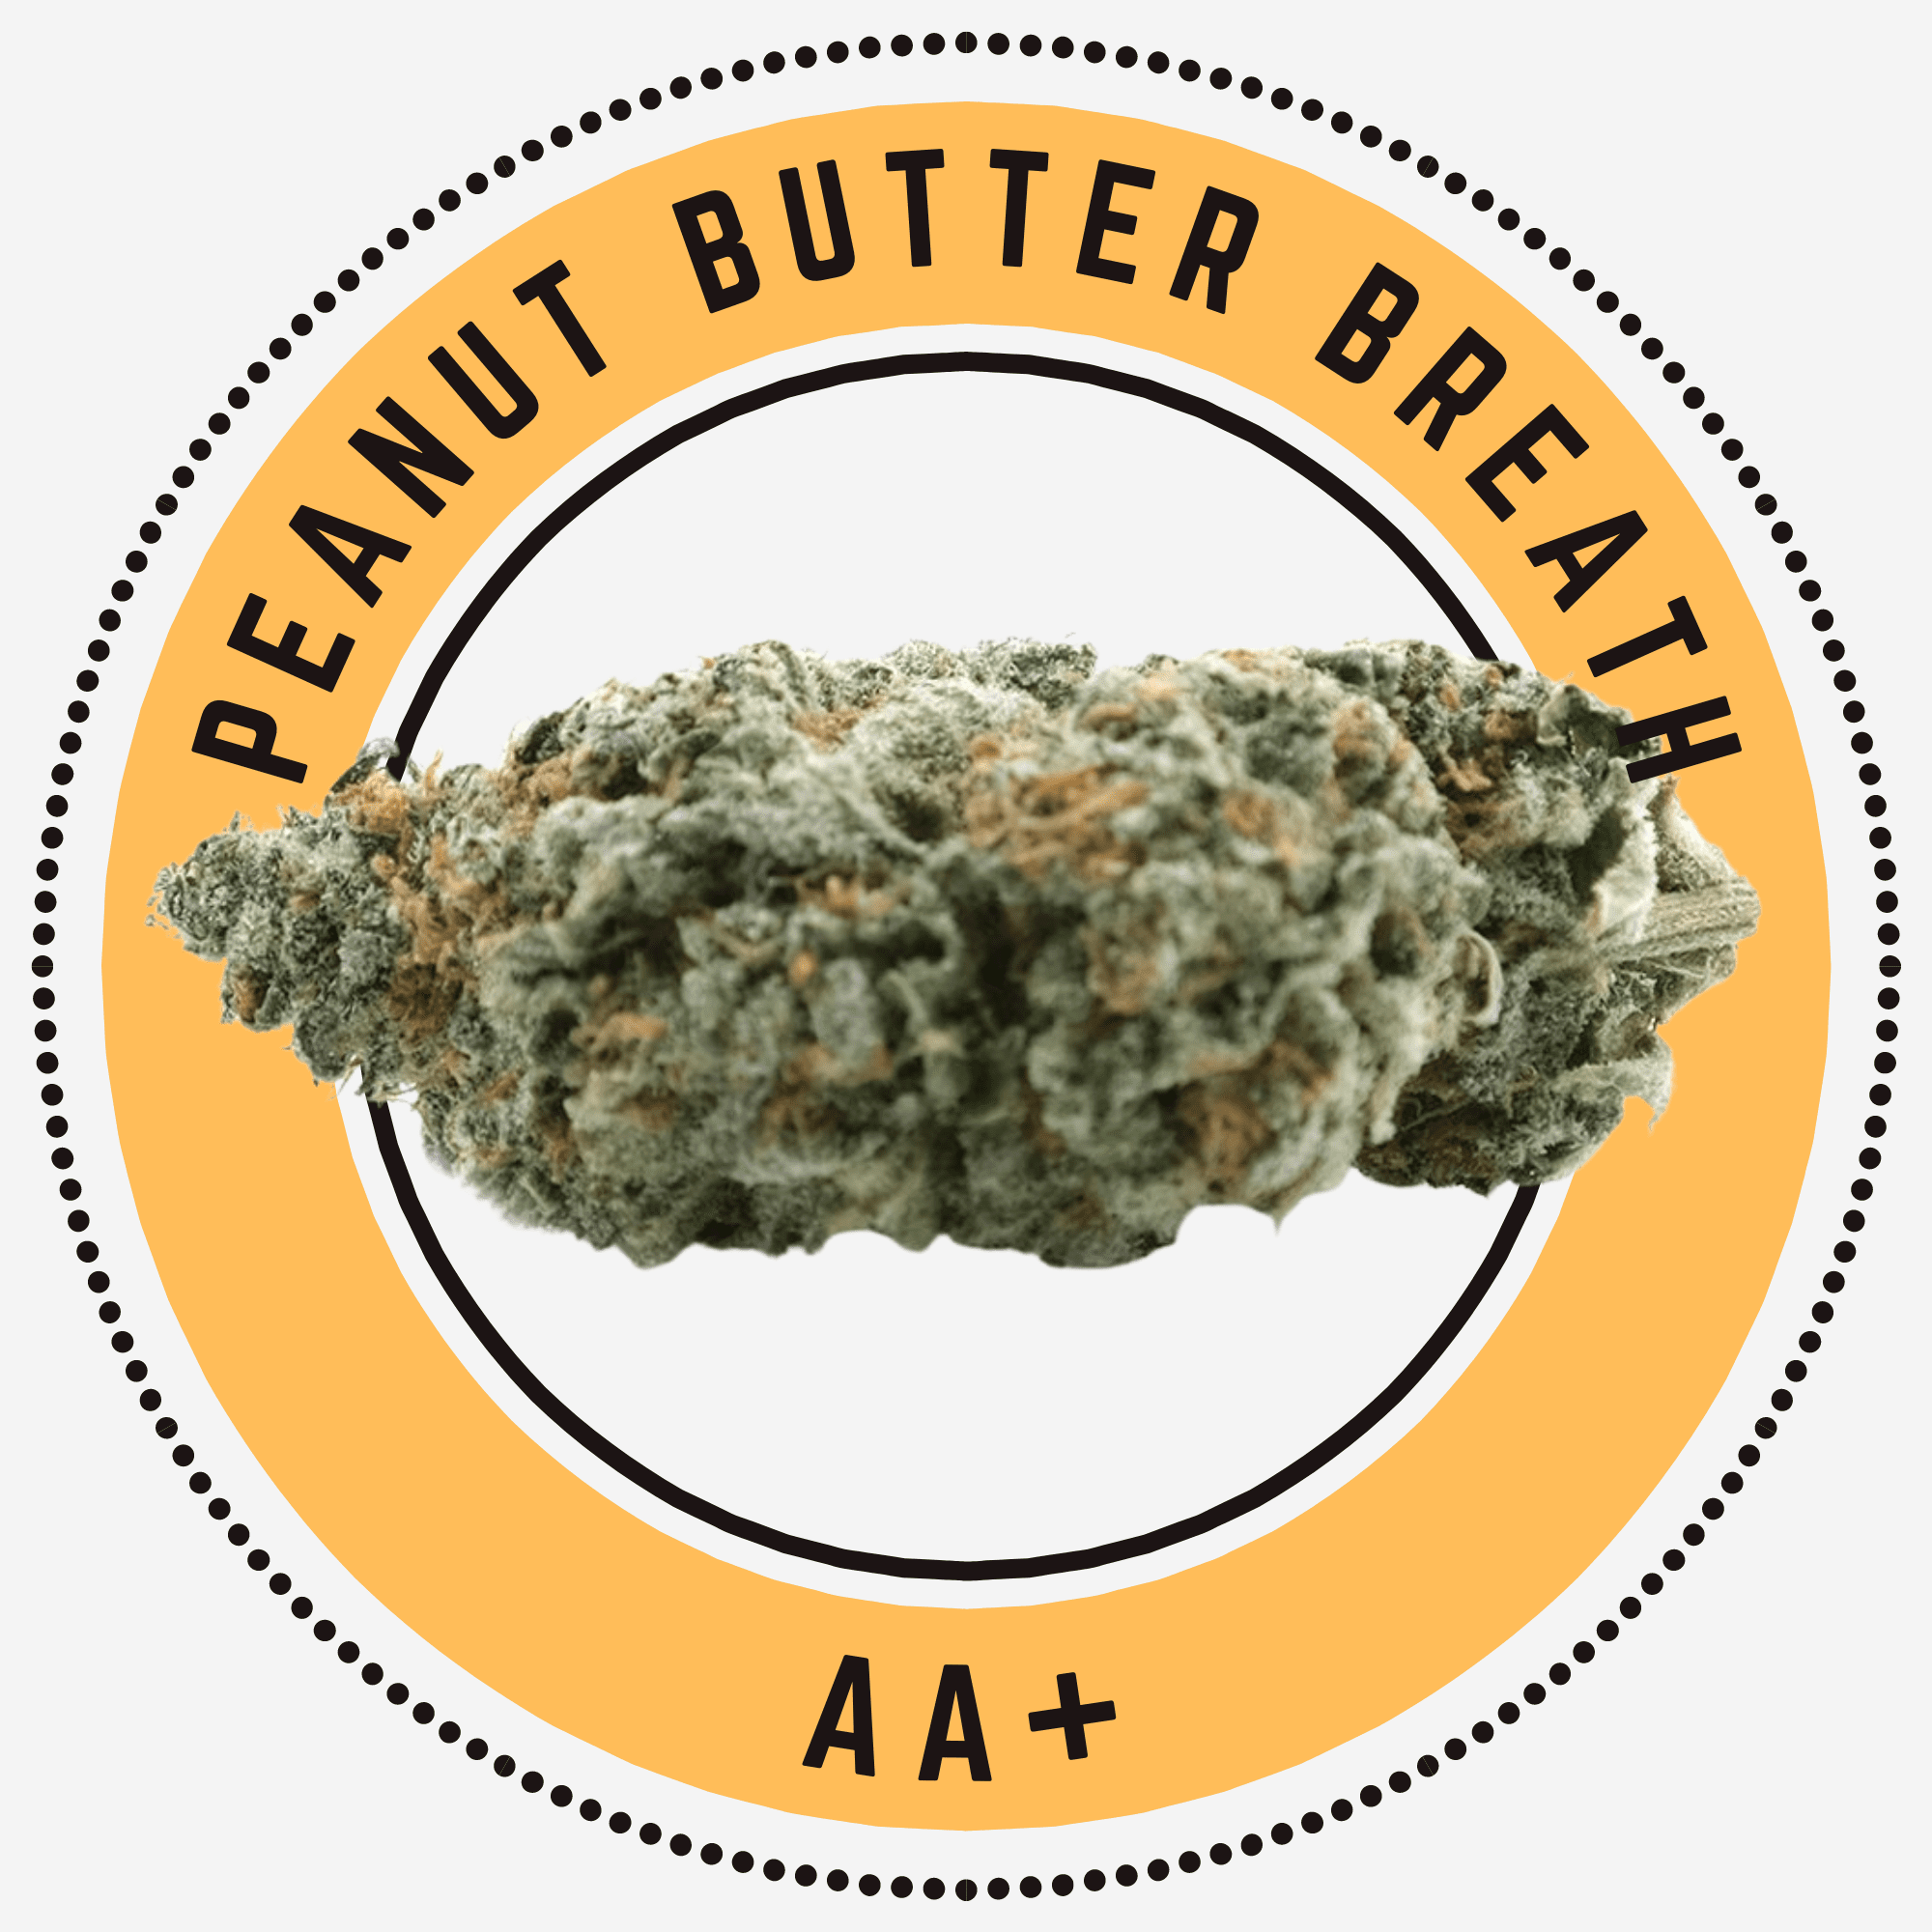 Peanut Butter Breath